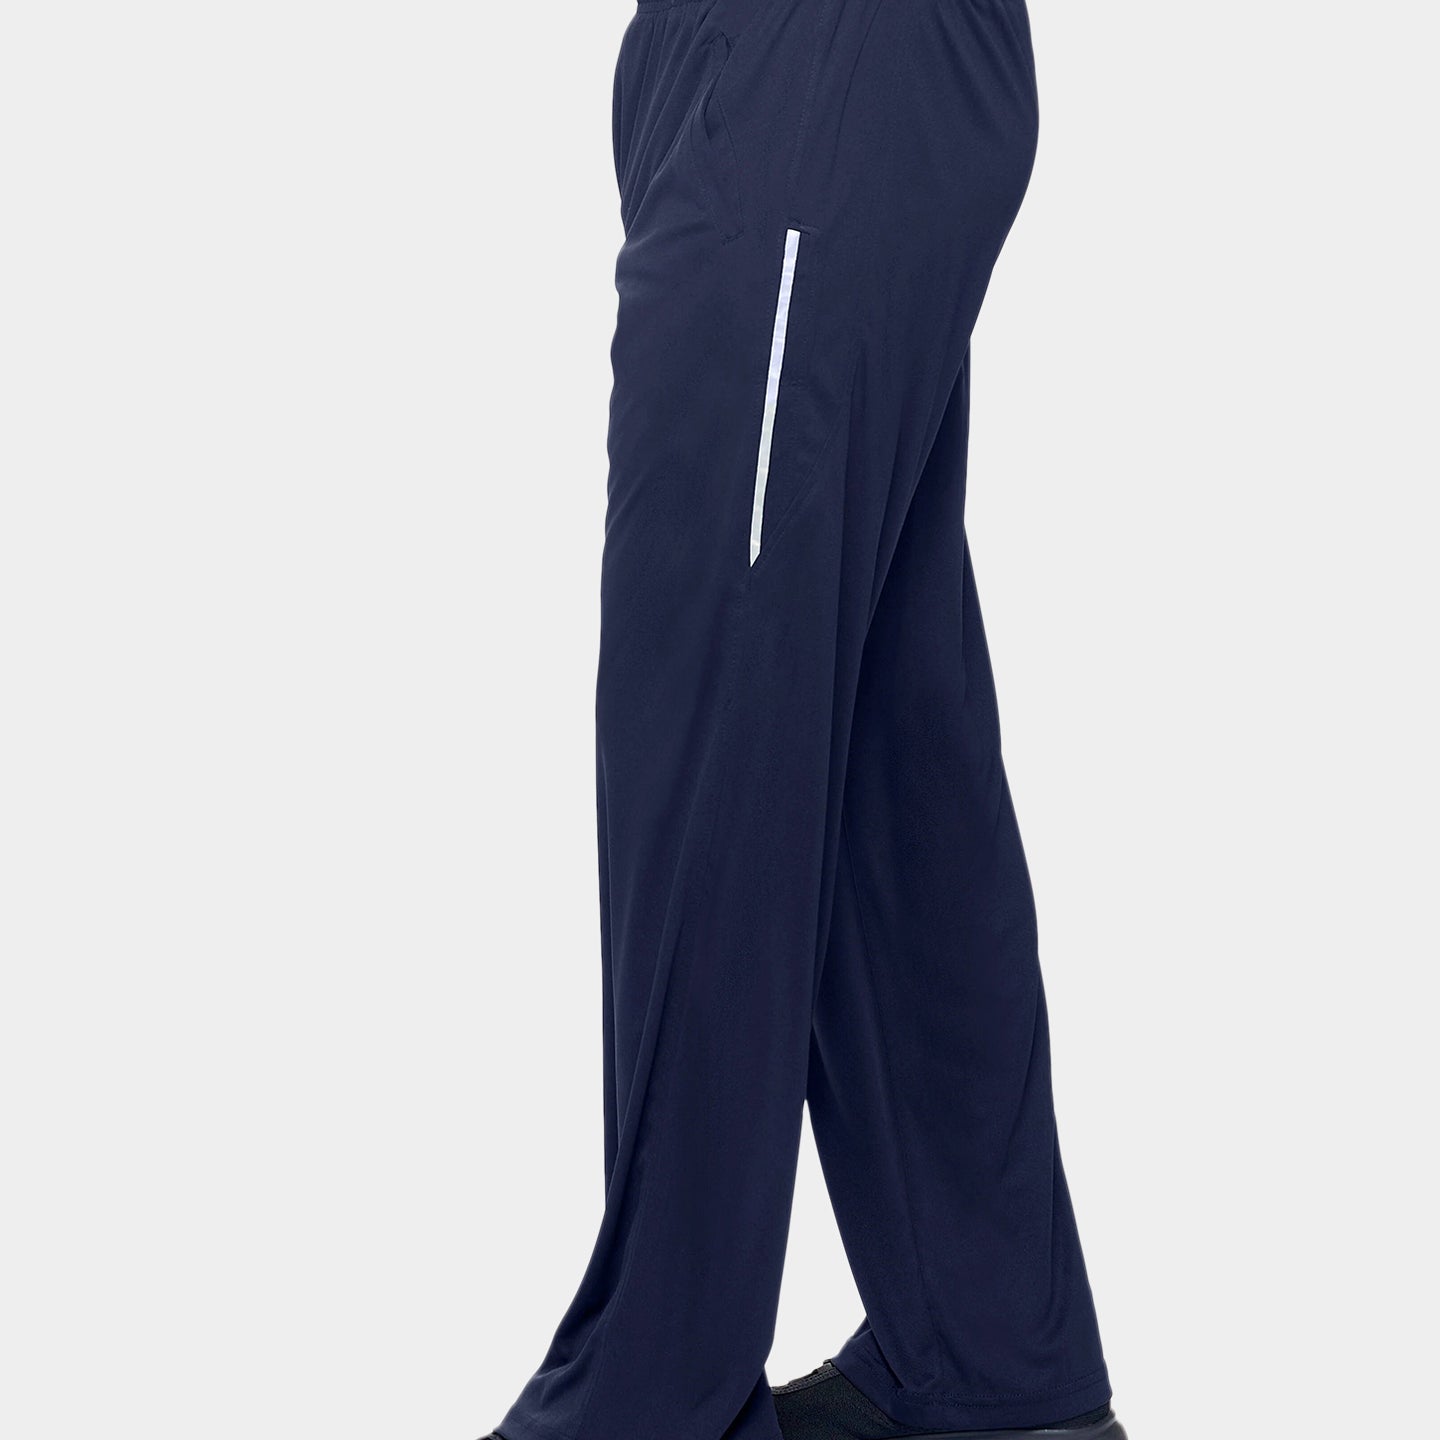 Expert Brand Men's Drimax Performance Pants, L, Navy A1